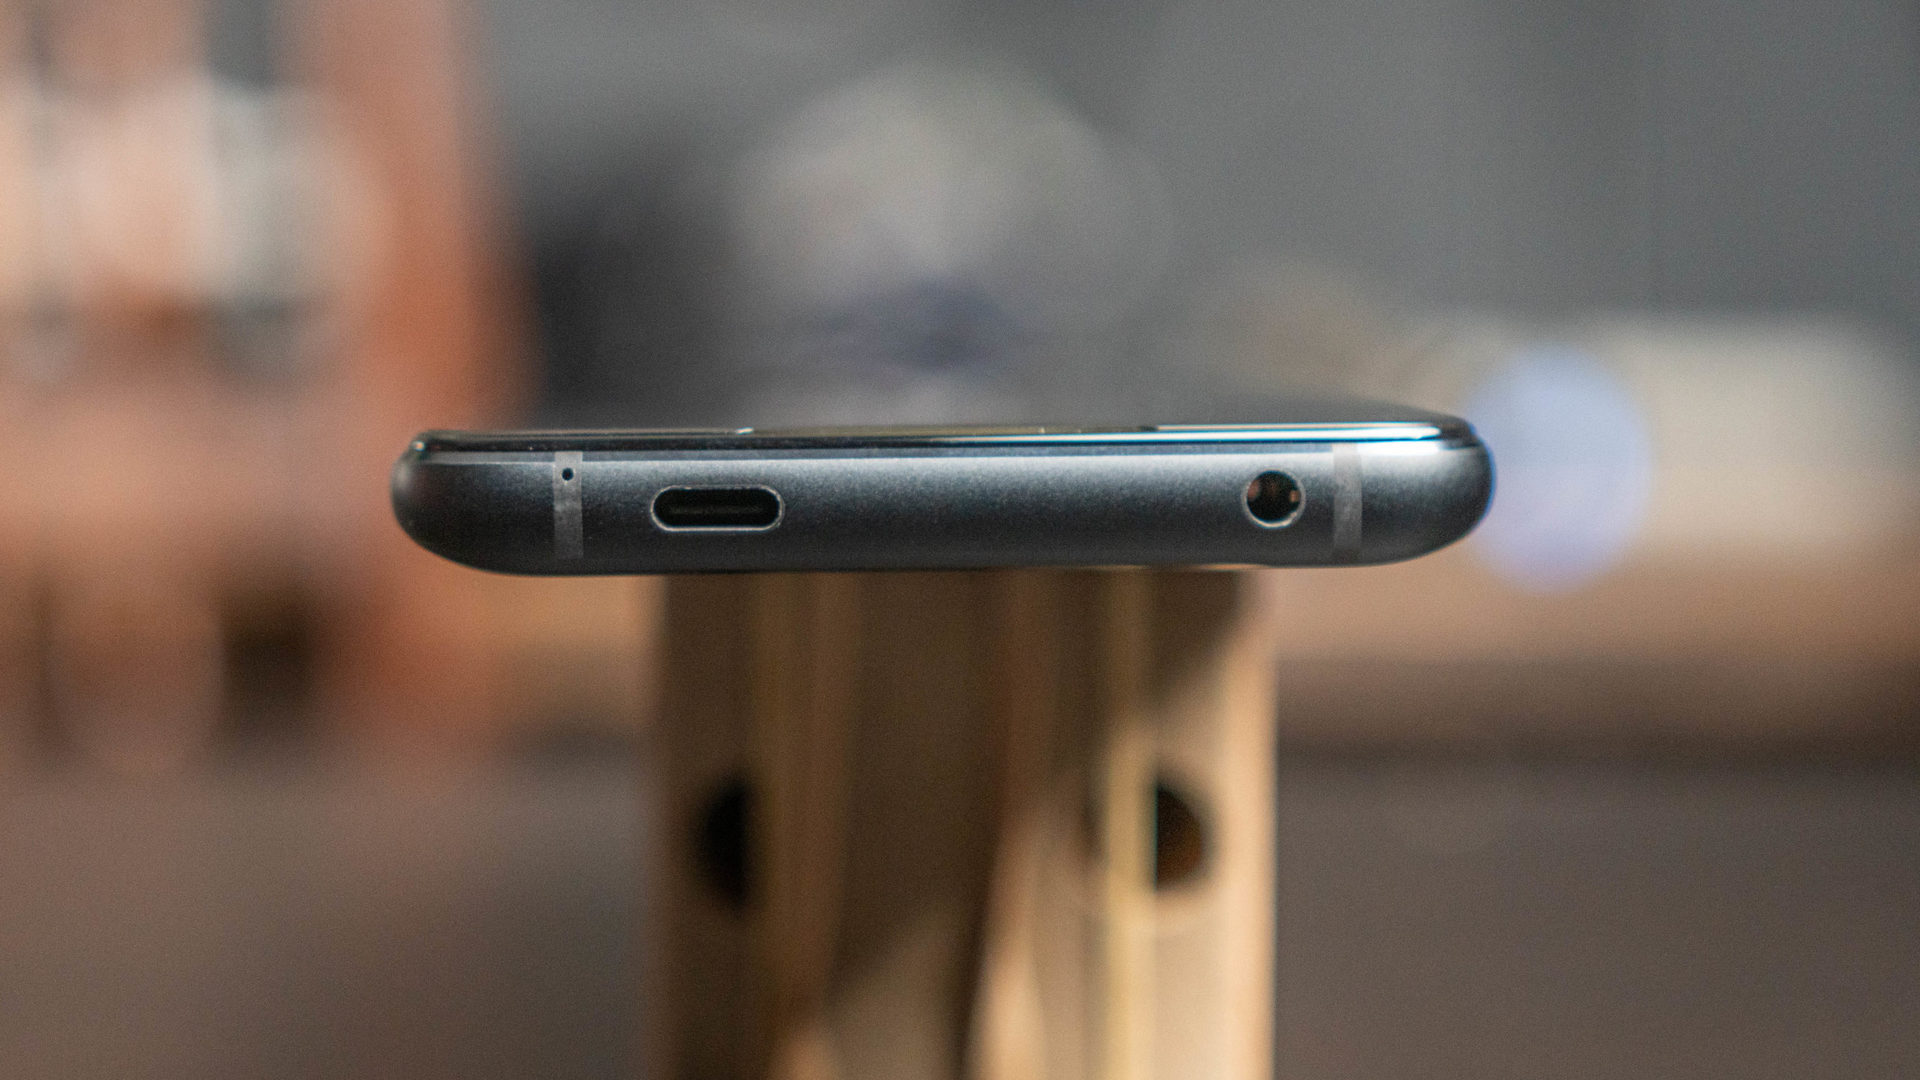 Asus Rog Phone设备底部拍摄的5个产品